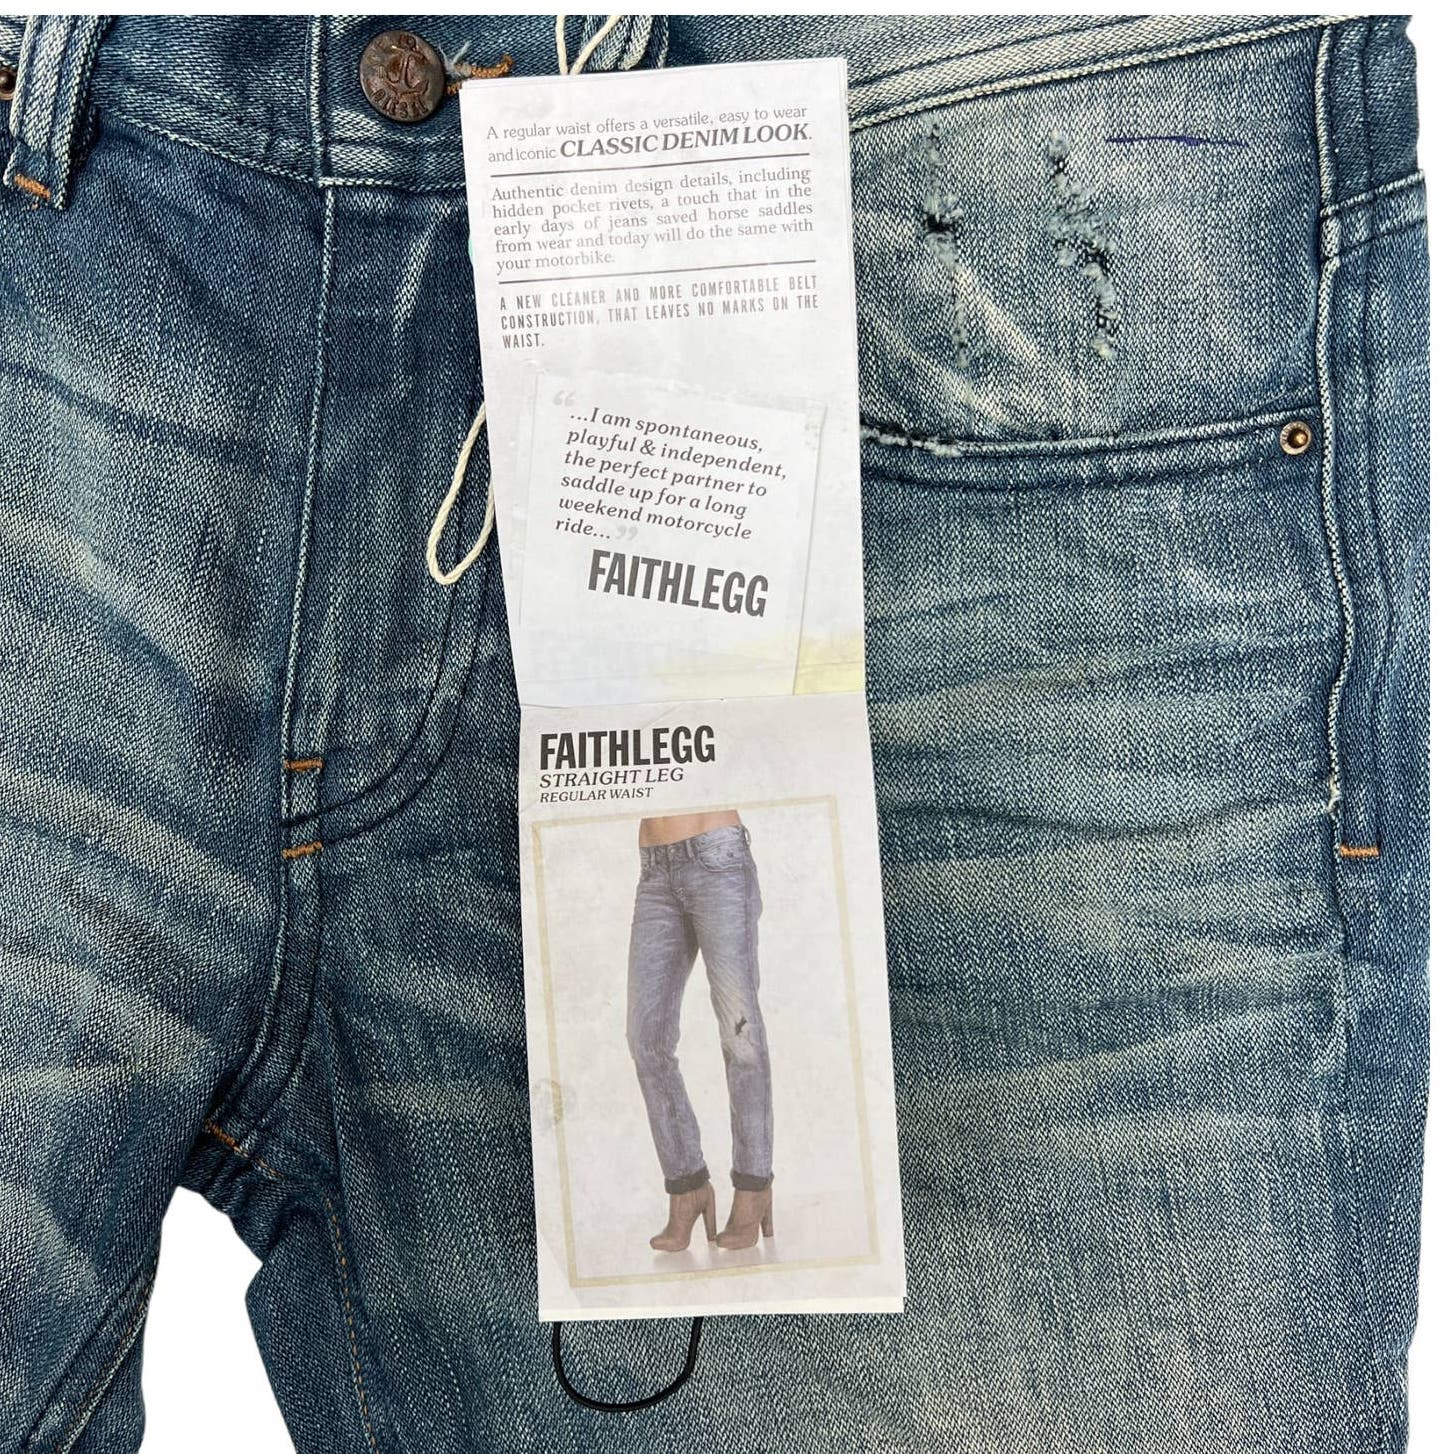 Diesel Women Denim Blue Jeans US 27 Washed Super Slim Skinny